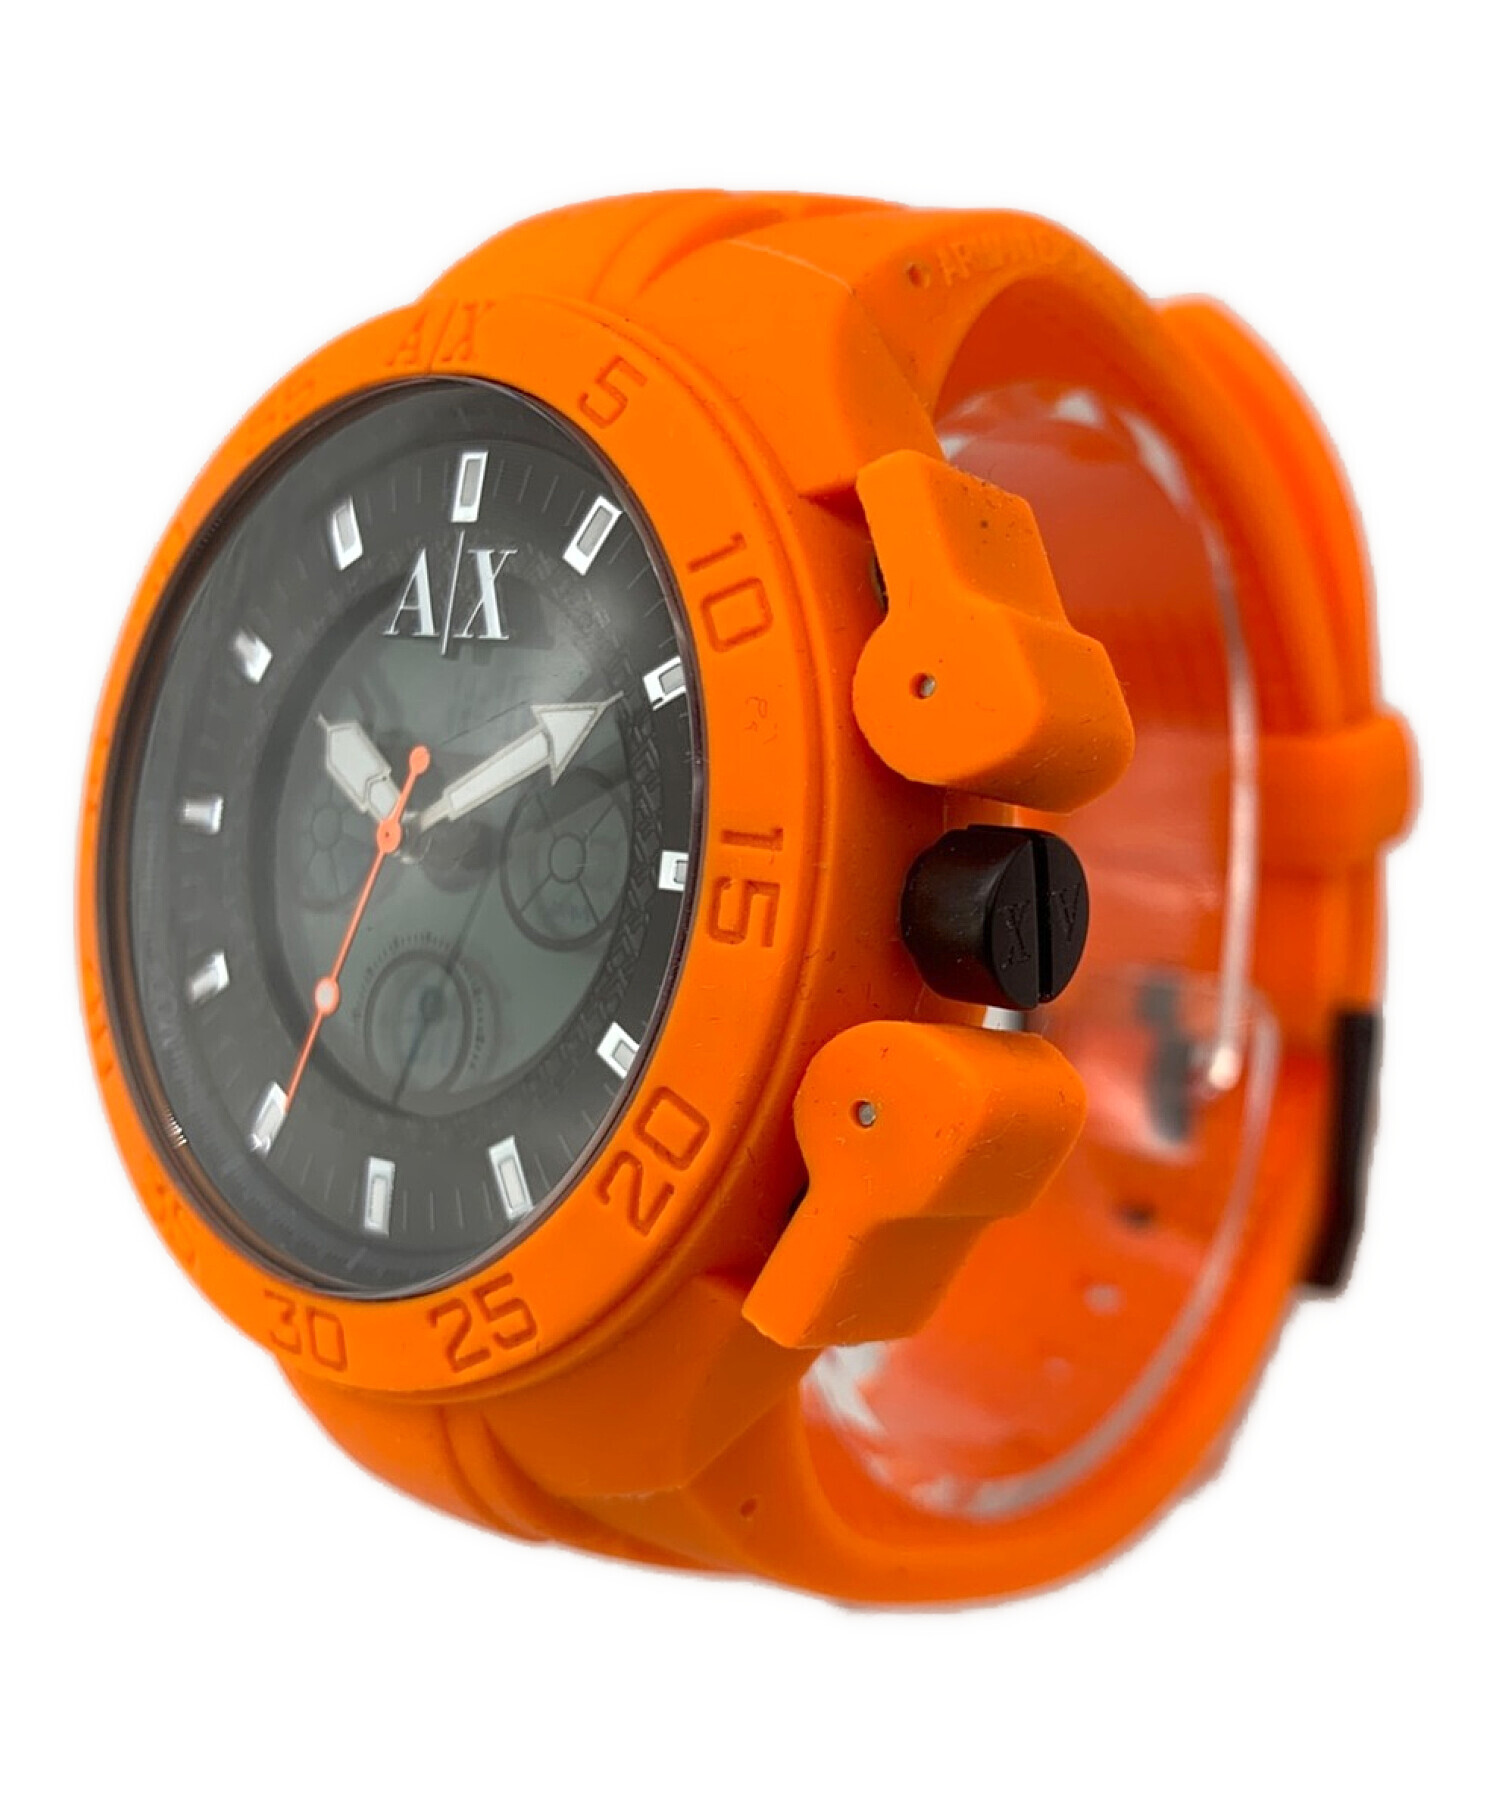 ARMANI EXCHANGE (アルマーニ エクスチェンジ) 腕時計 オレンジ